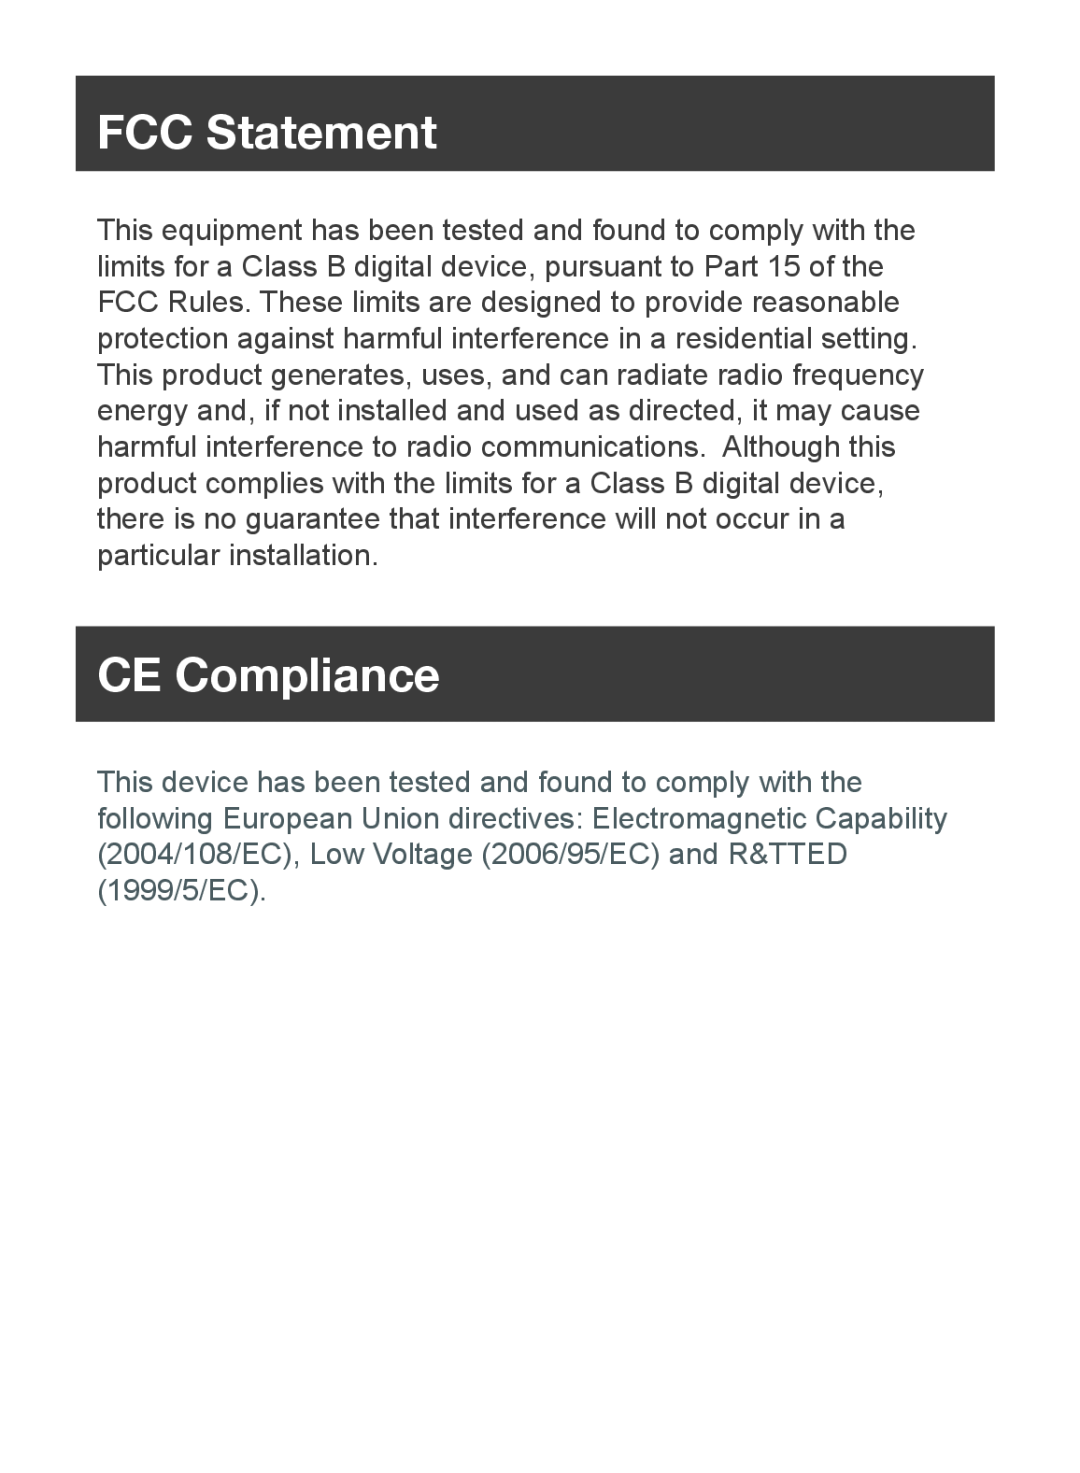 IOGear Q1280 quick start FCC Statement, CE Compliance 